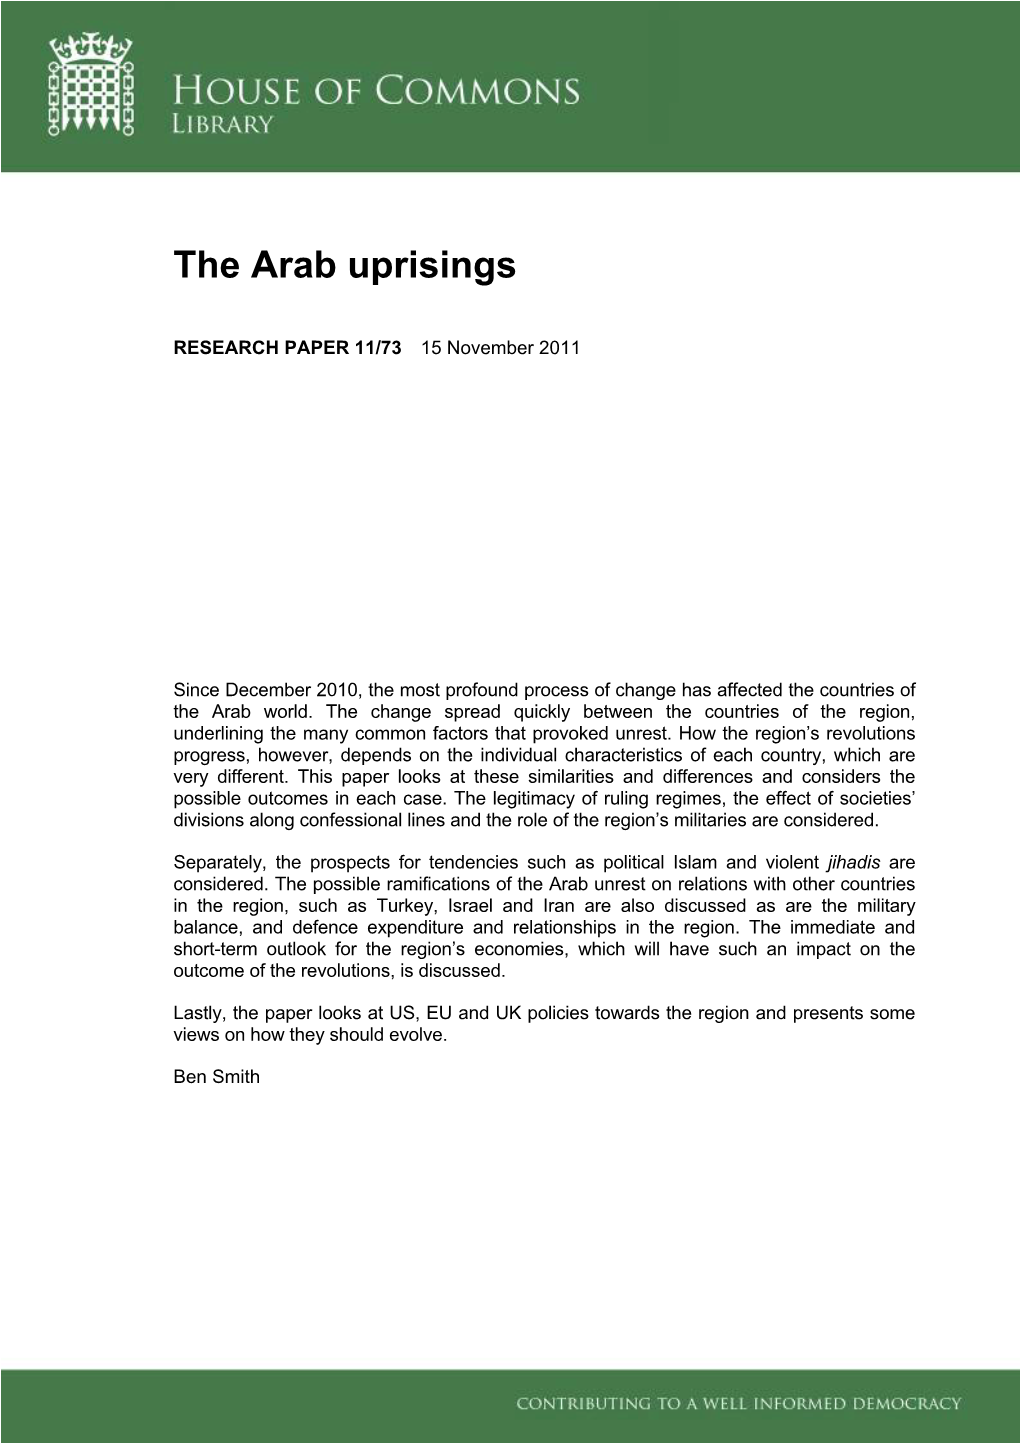 The Arab Uprisings